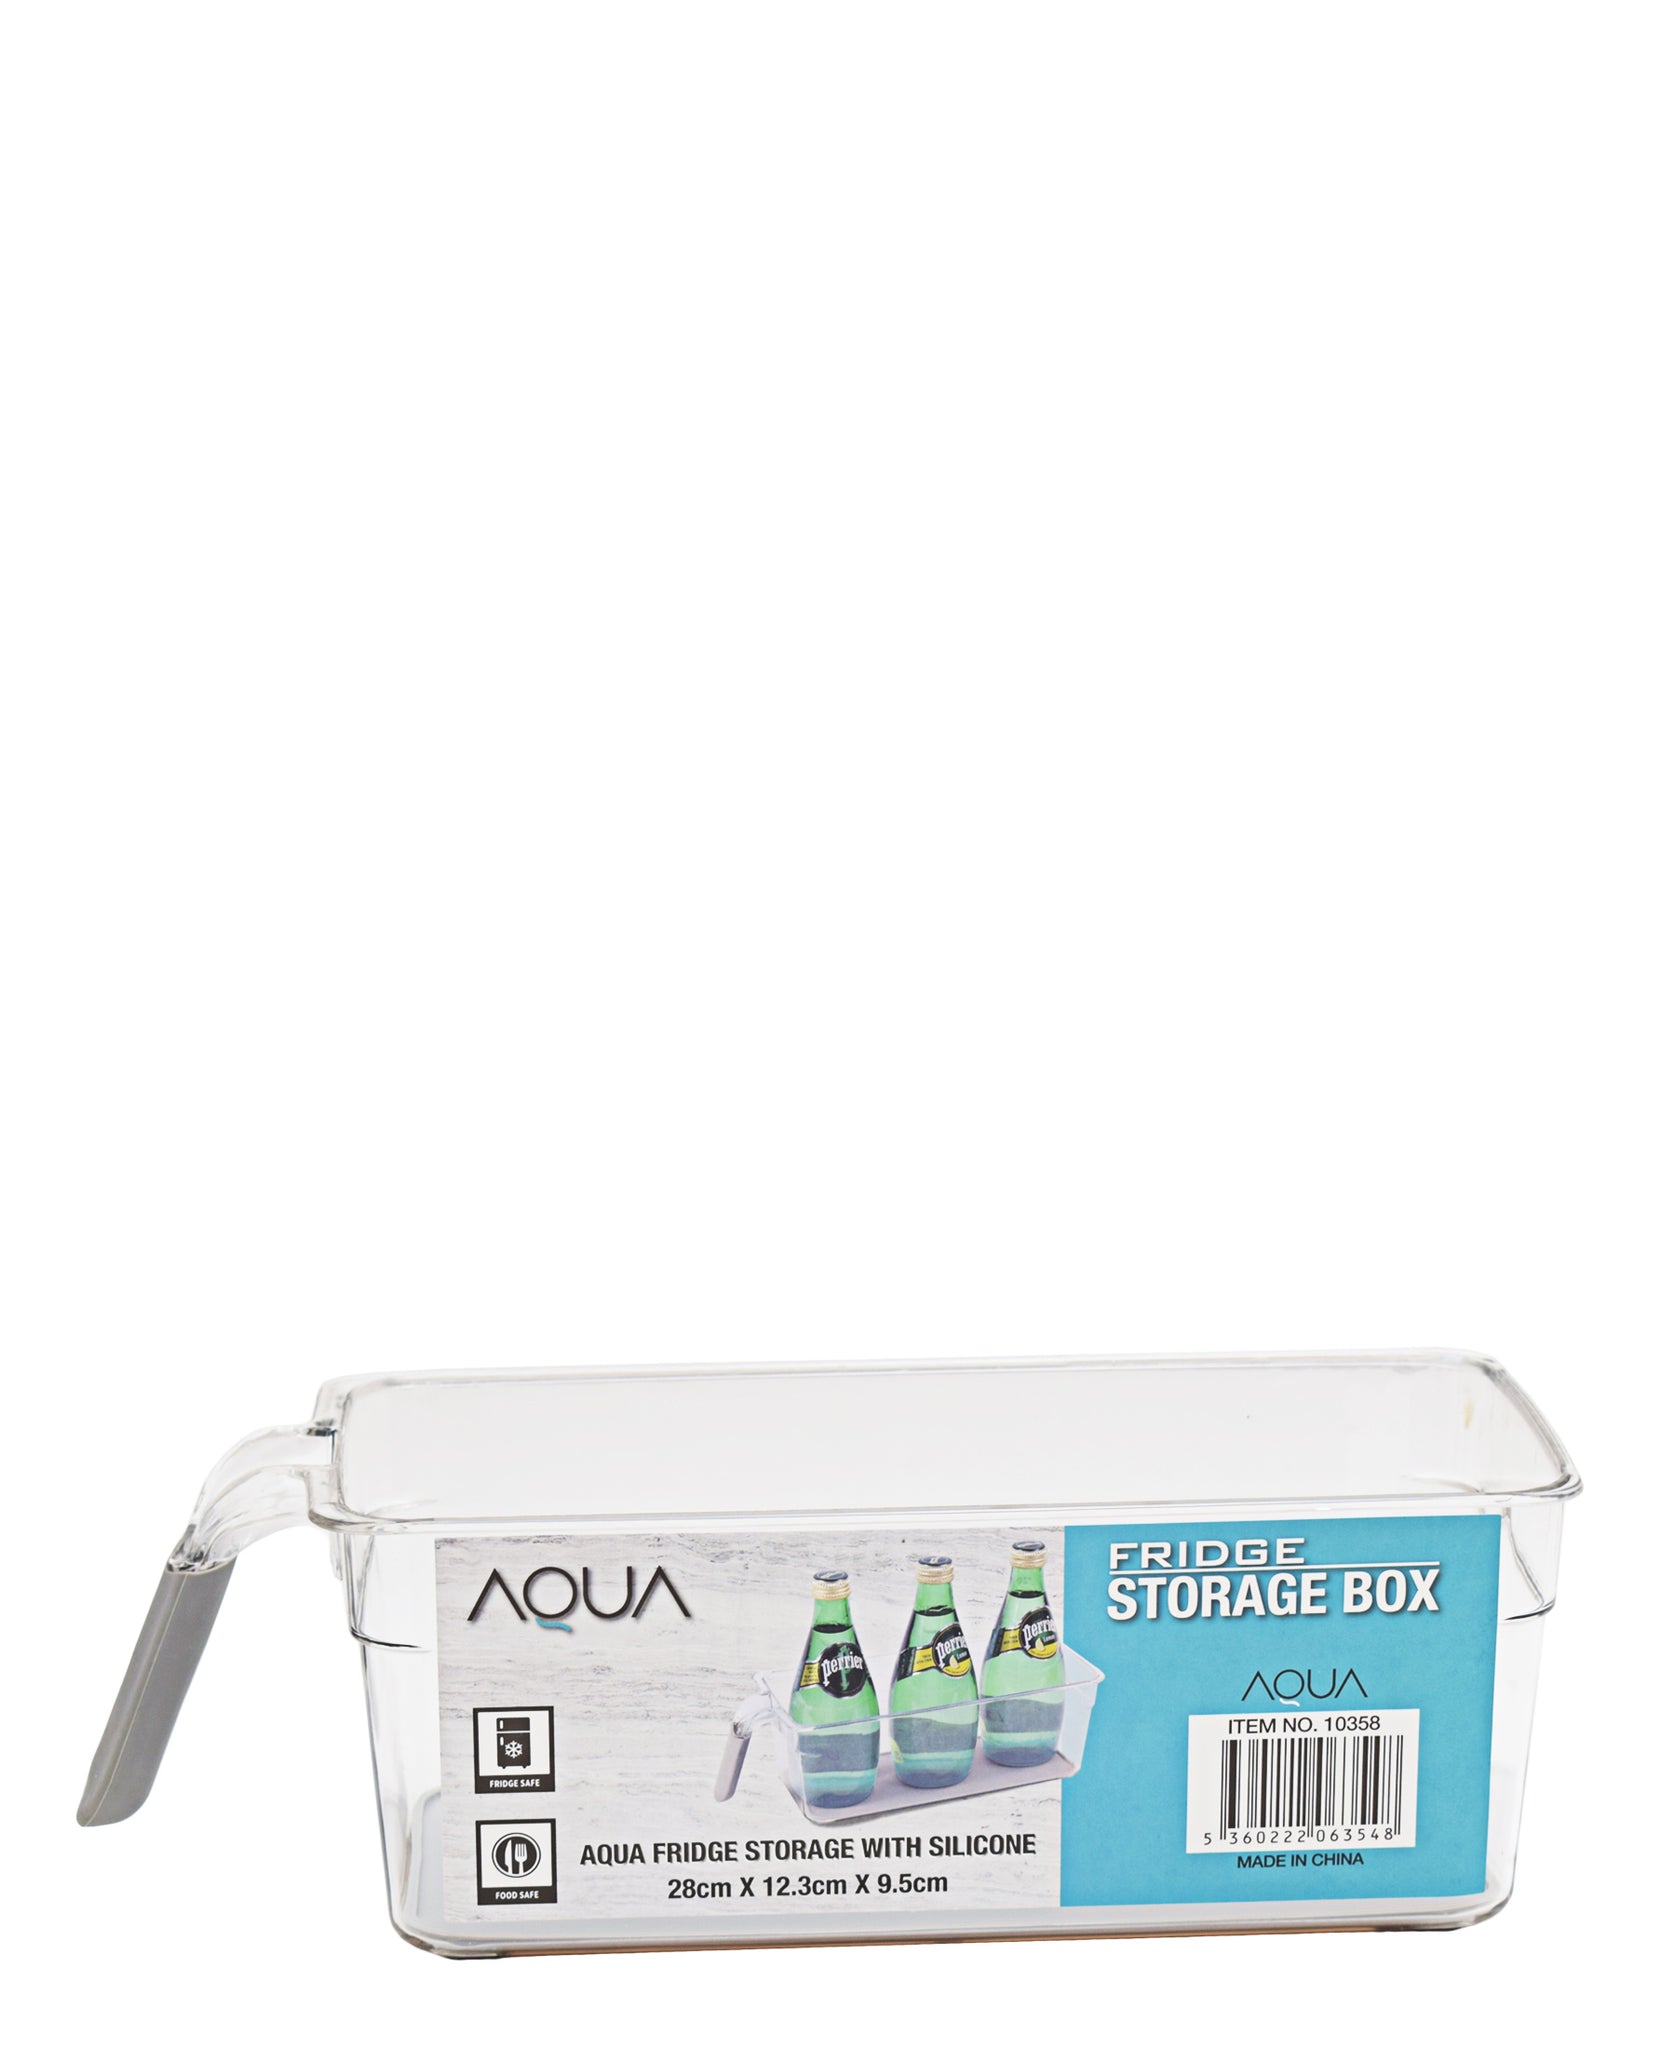 Aqua Fridge Storage Box With Silicone - Clear